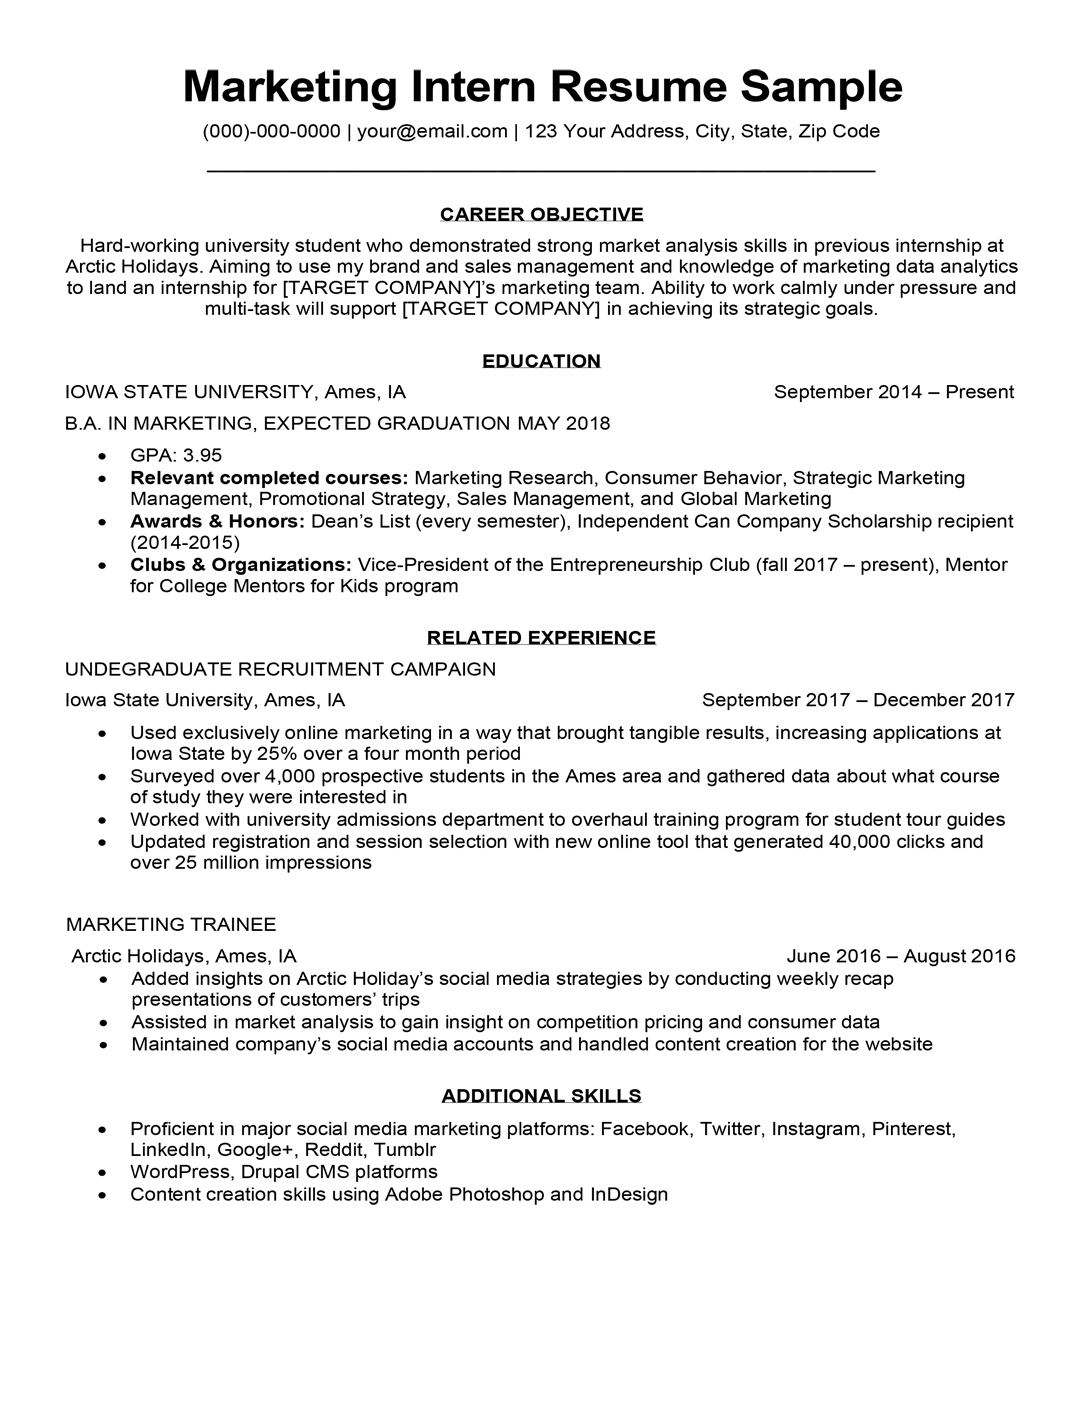 Graduate Student Resume For Internship from resumecompanion.com